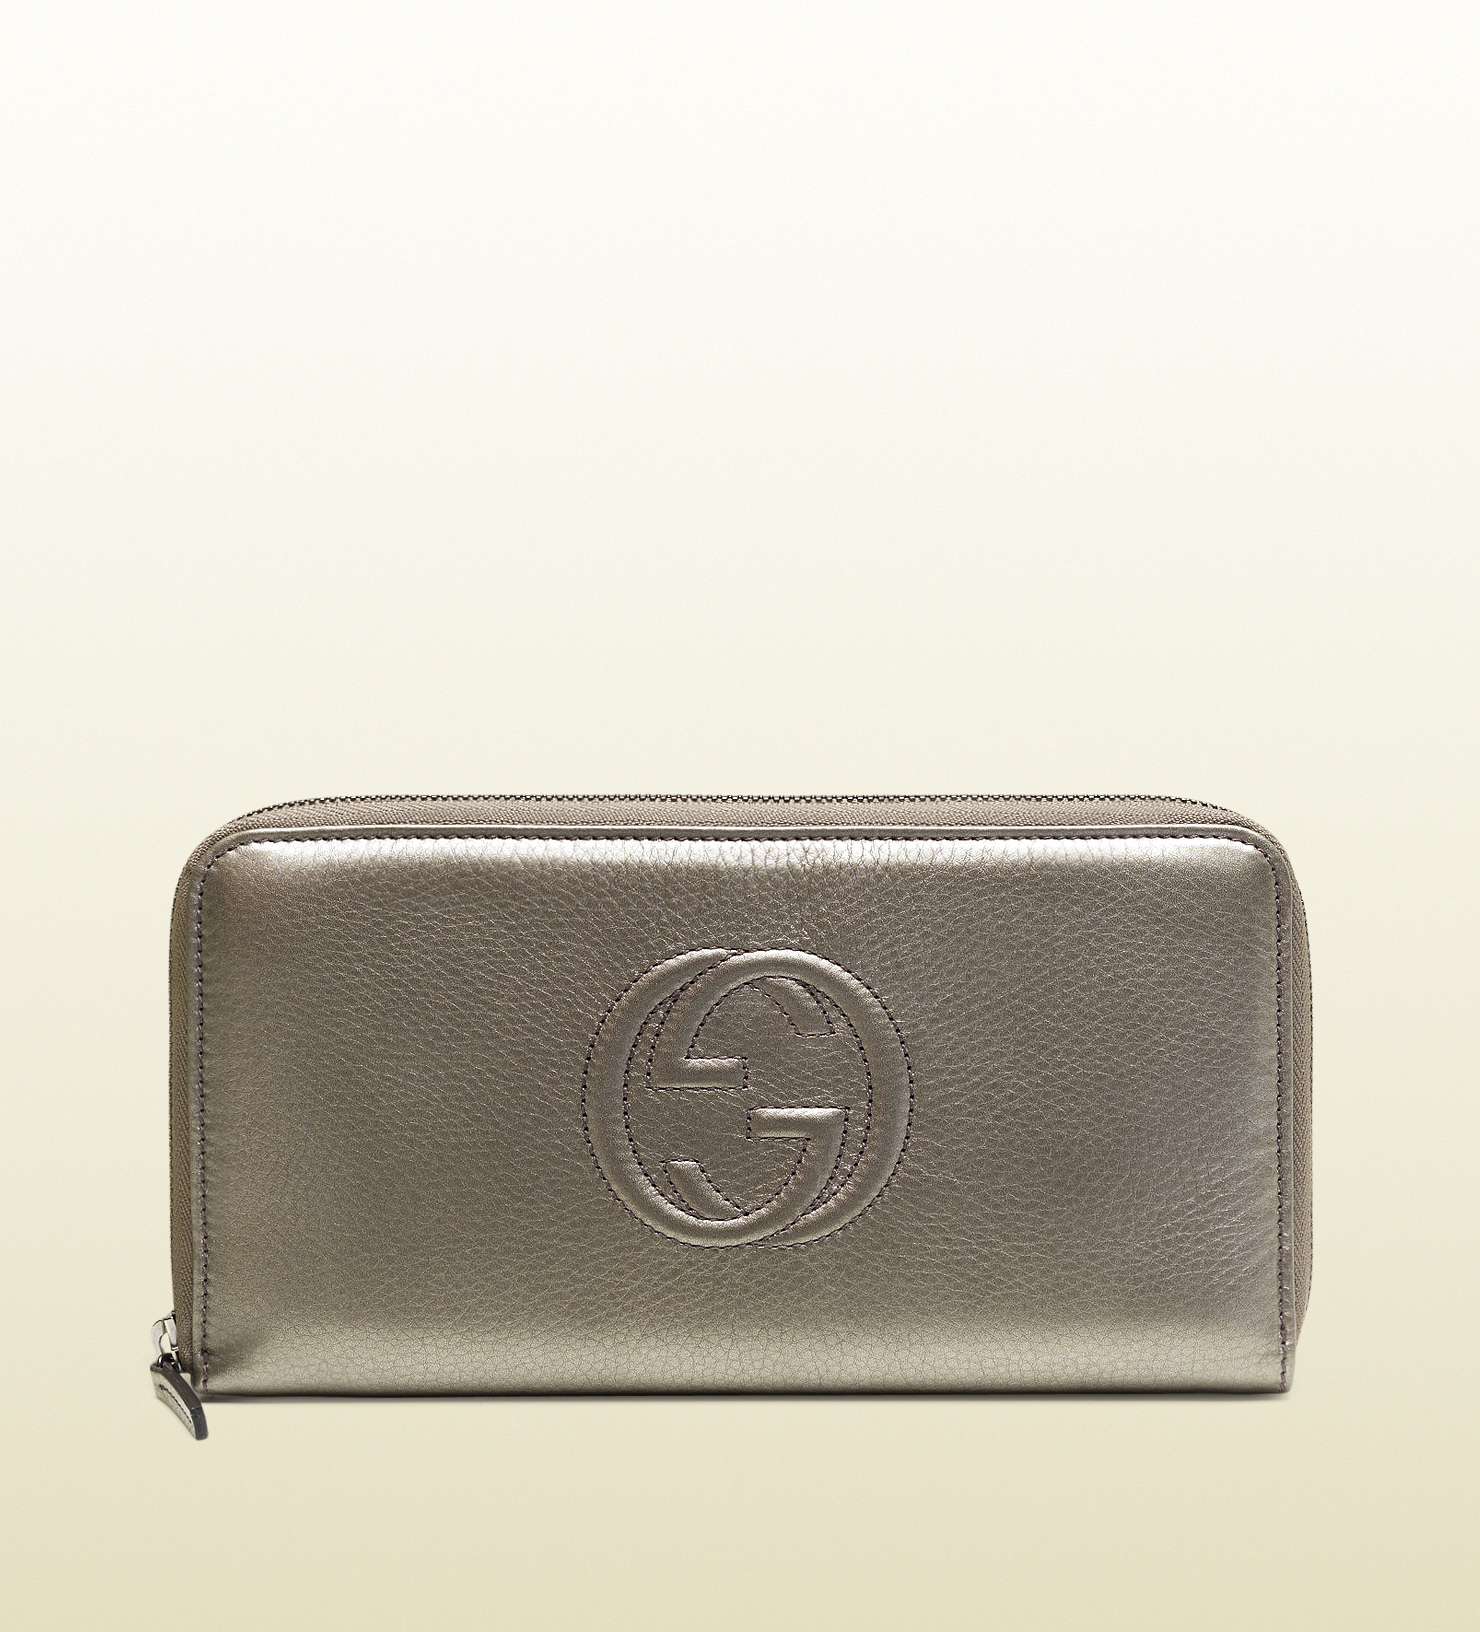 Gucci Metallic Leather Zip Around Wallet in Gray for Men (grey) | Lyst